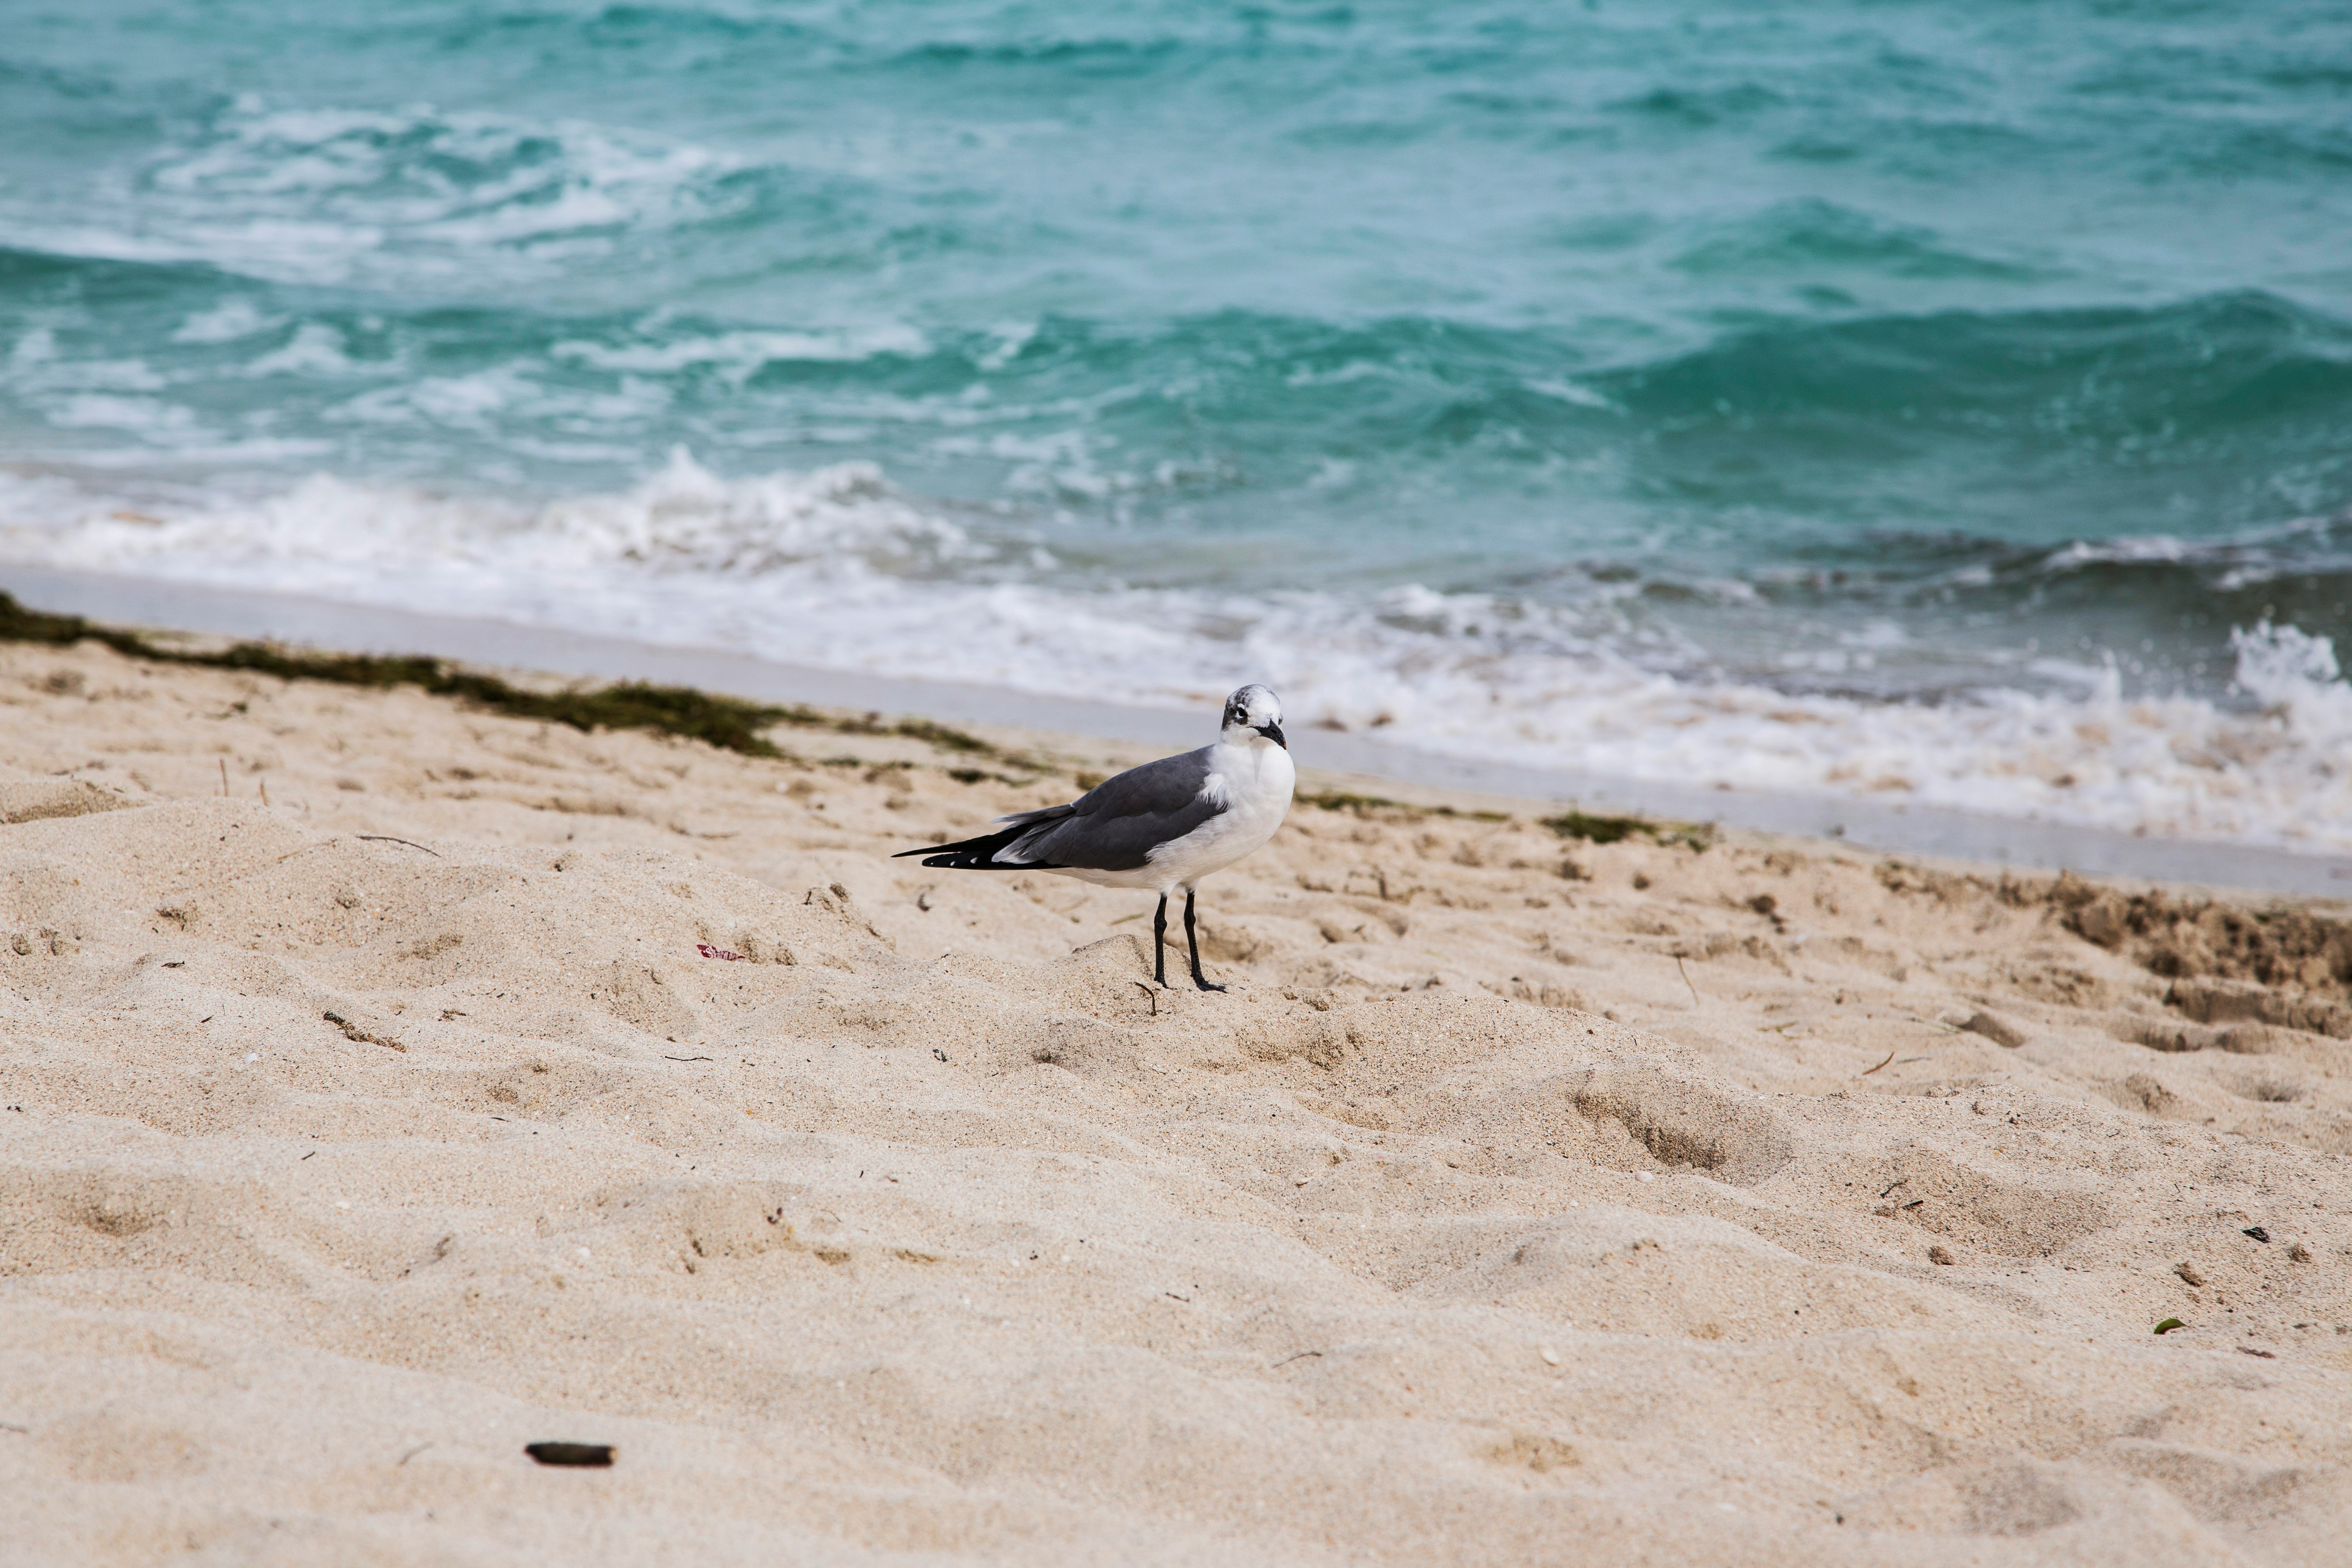 white and gray bird on beach shore during daytime